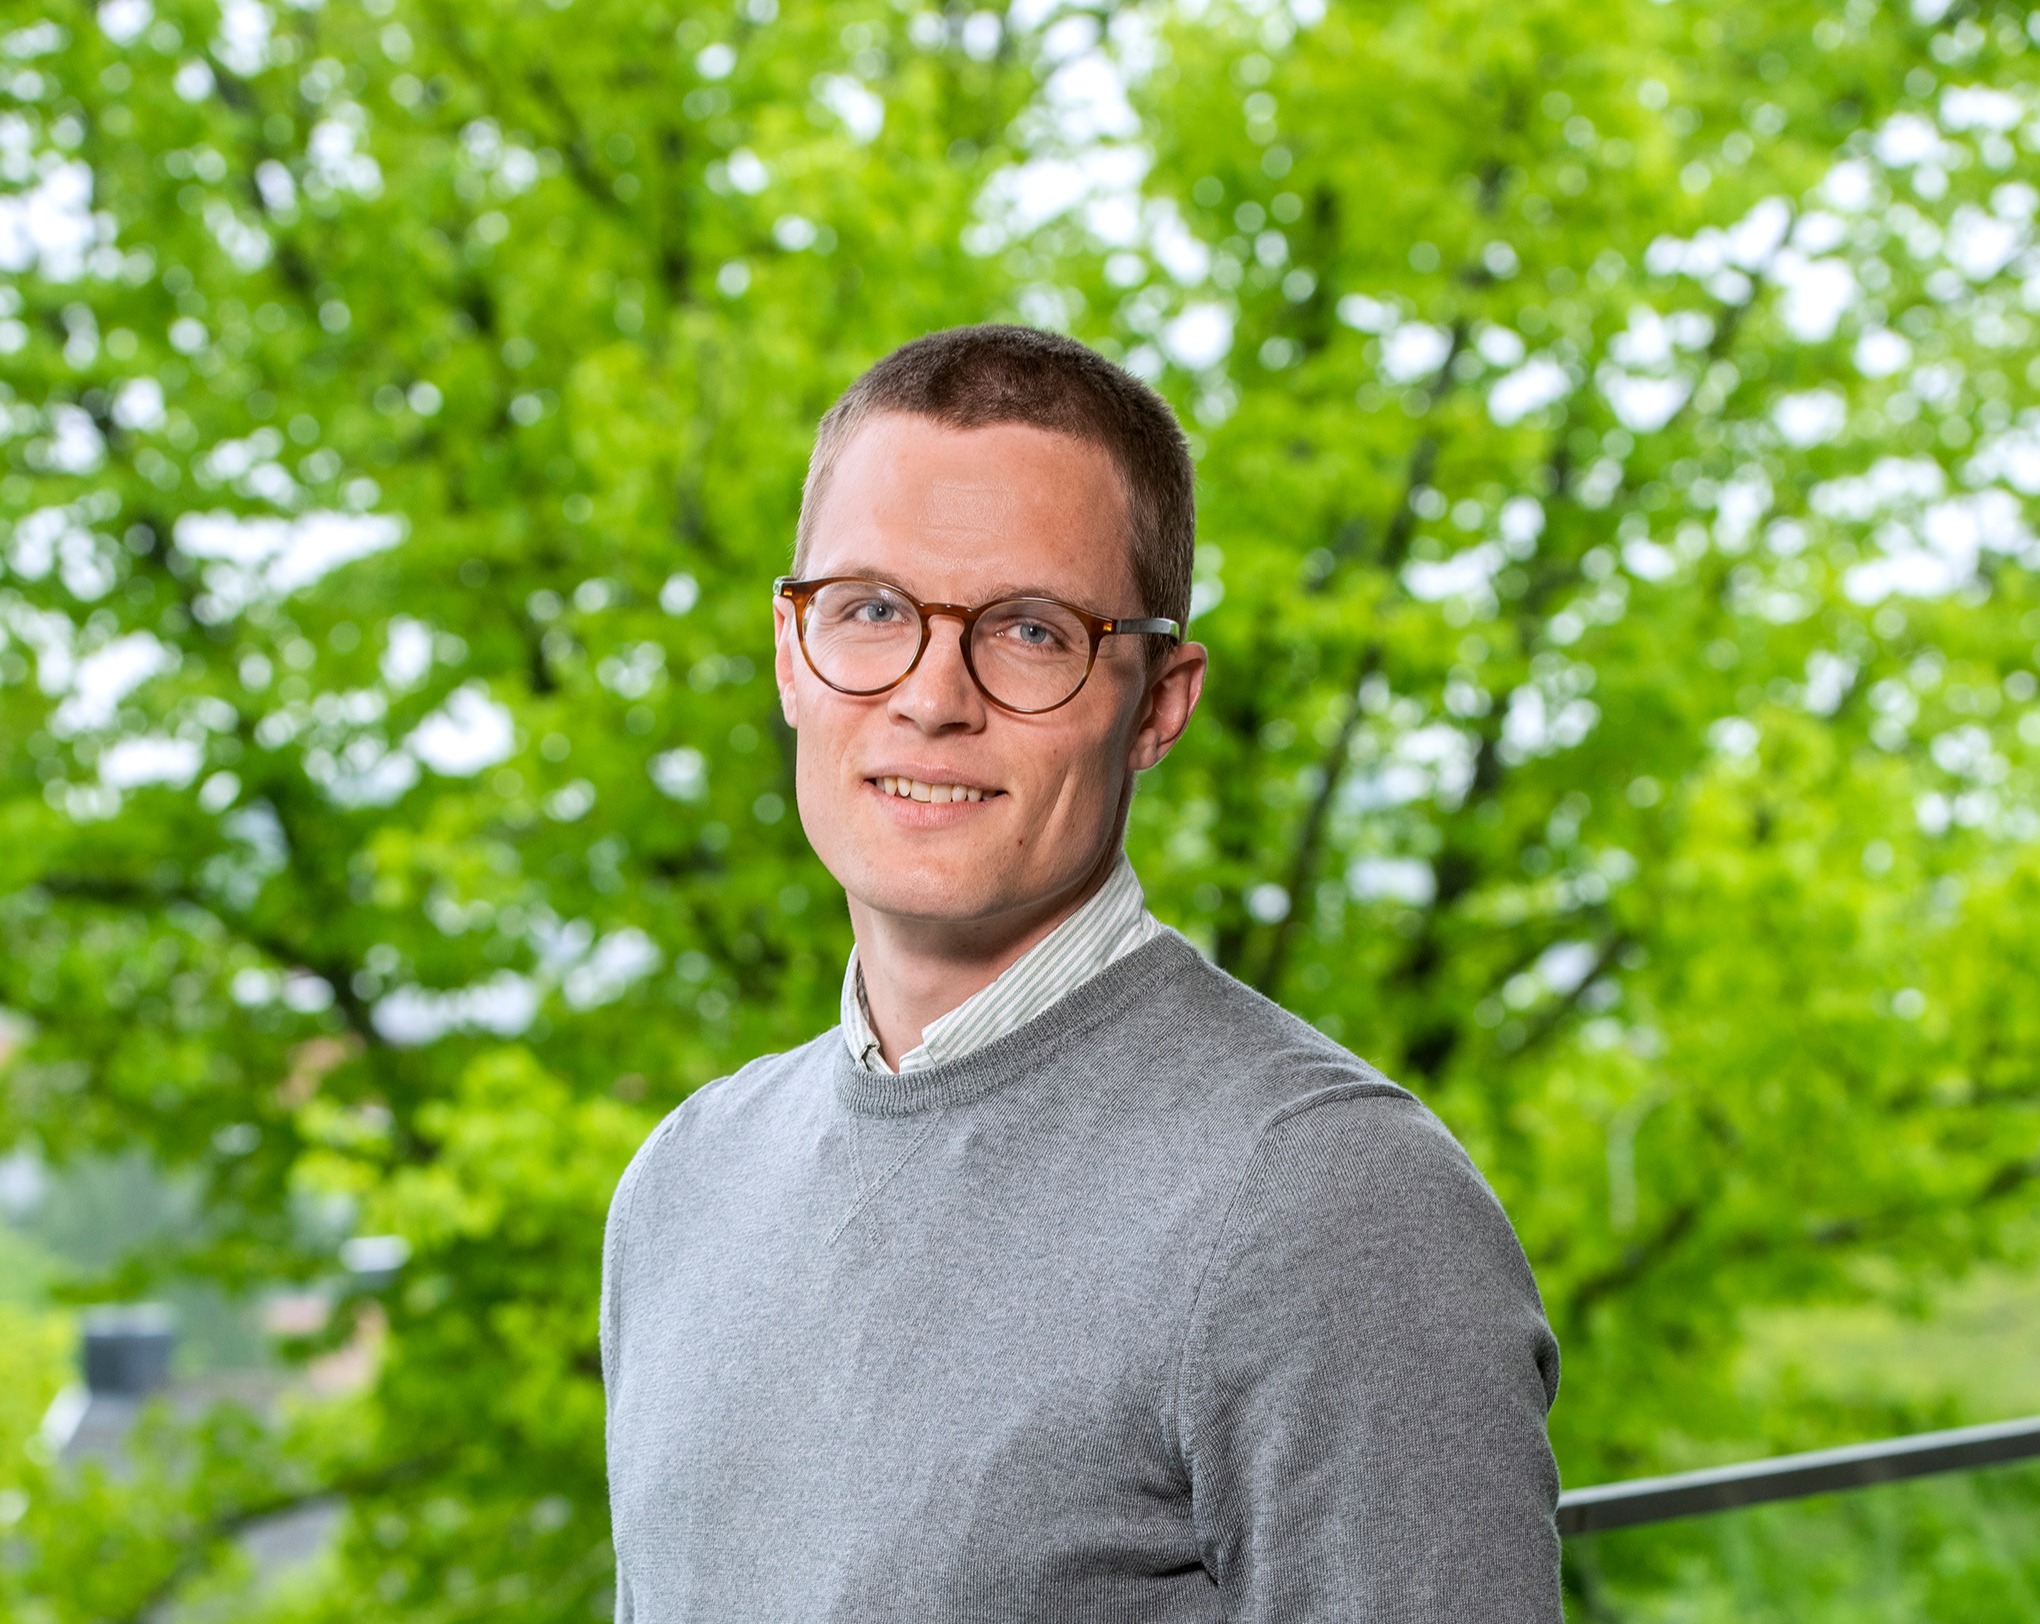 david björverud consafe logistics sustainability ambassador for the enviroment